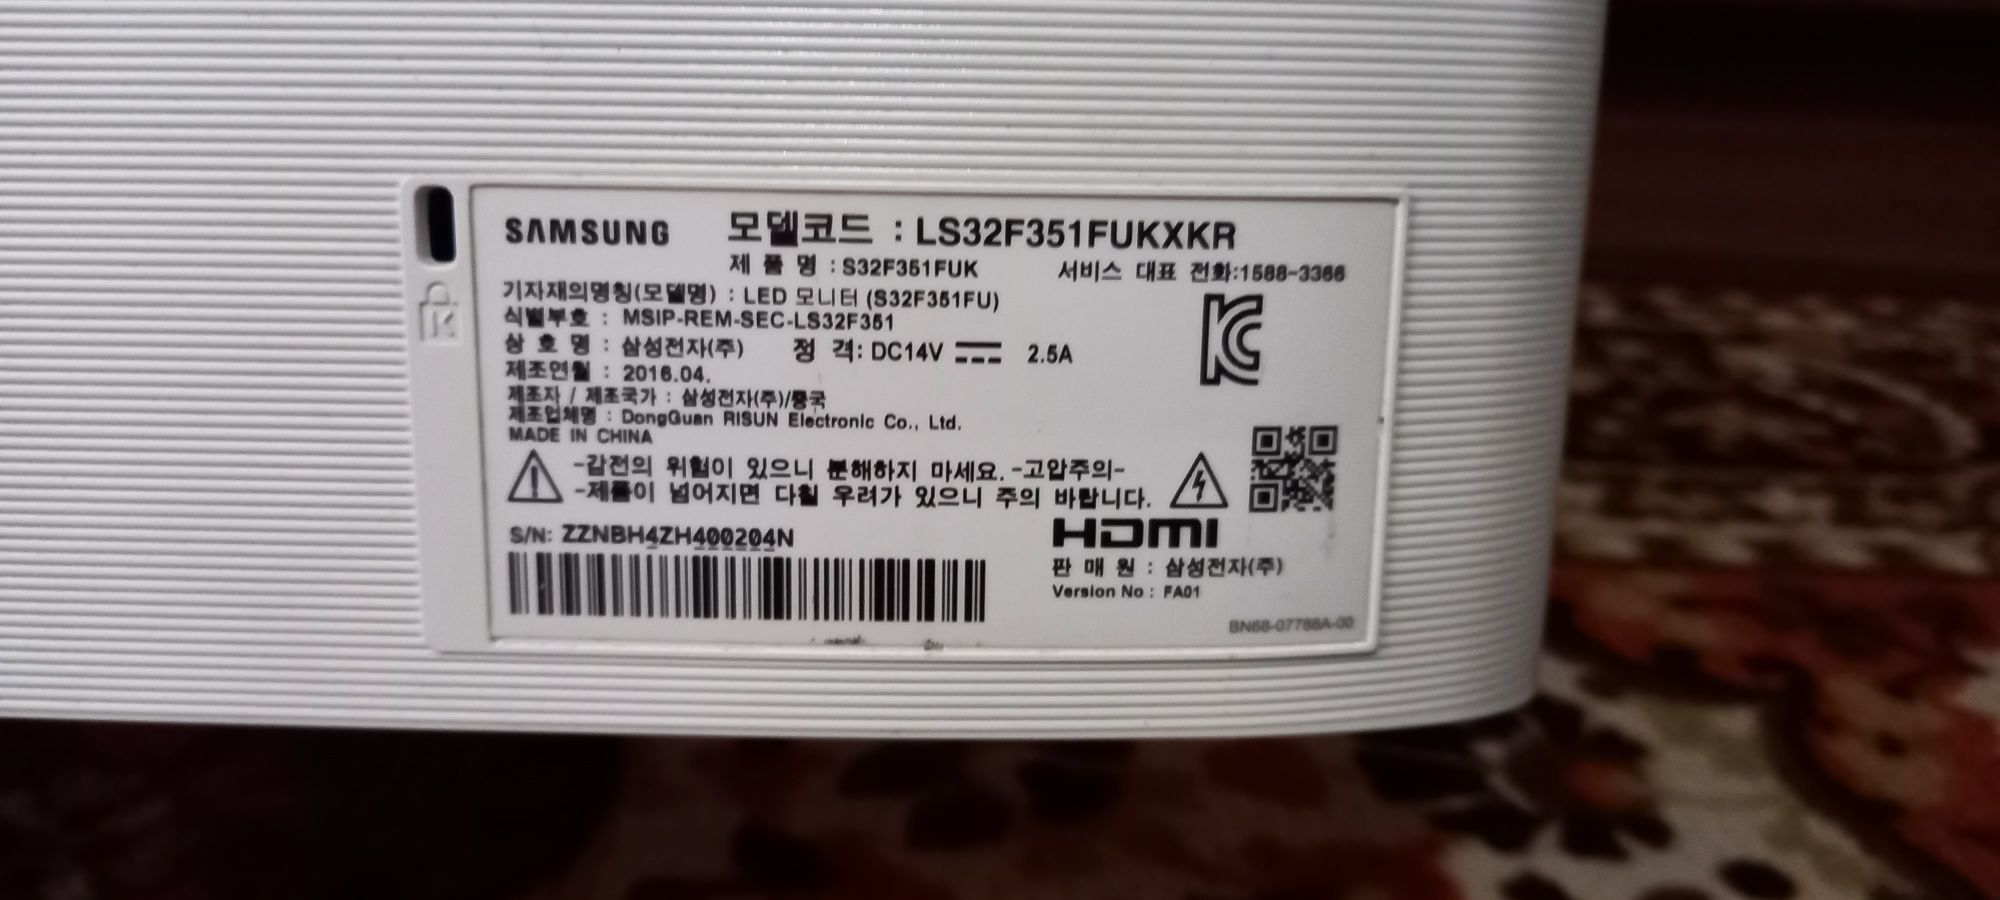 Продам монитор 32 дюйма на запчасти фирма Samsung